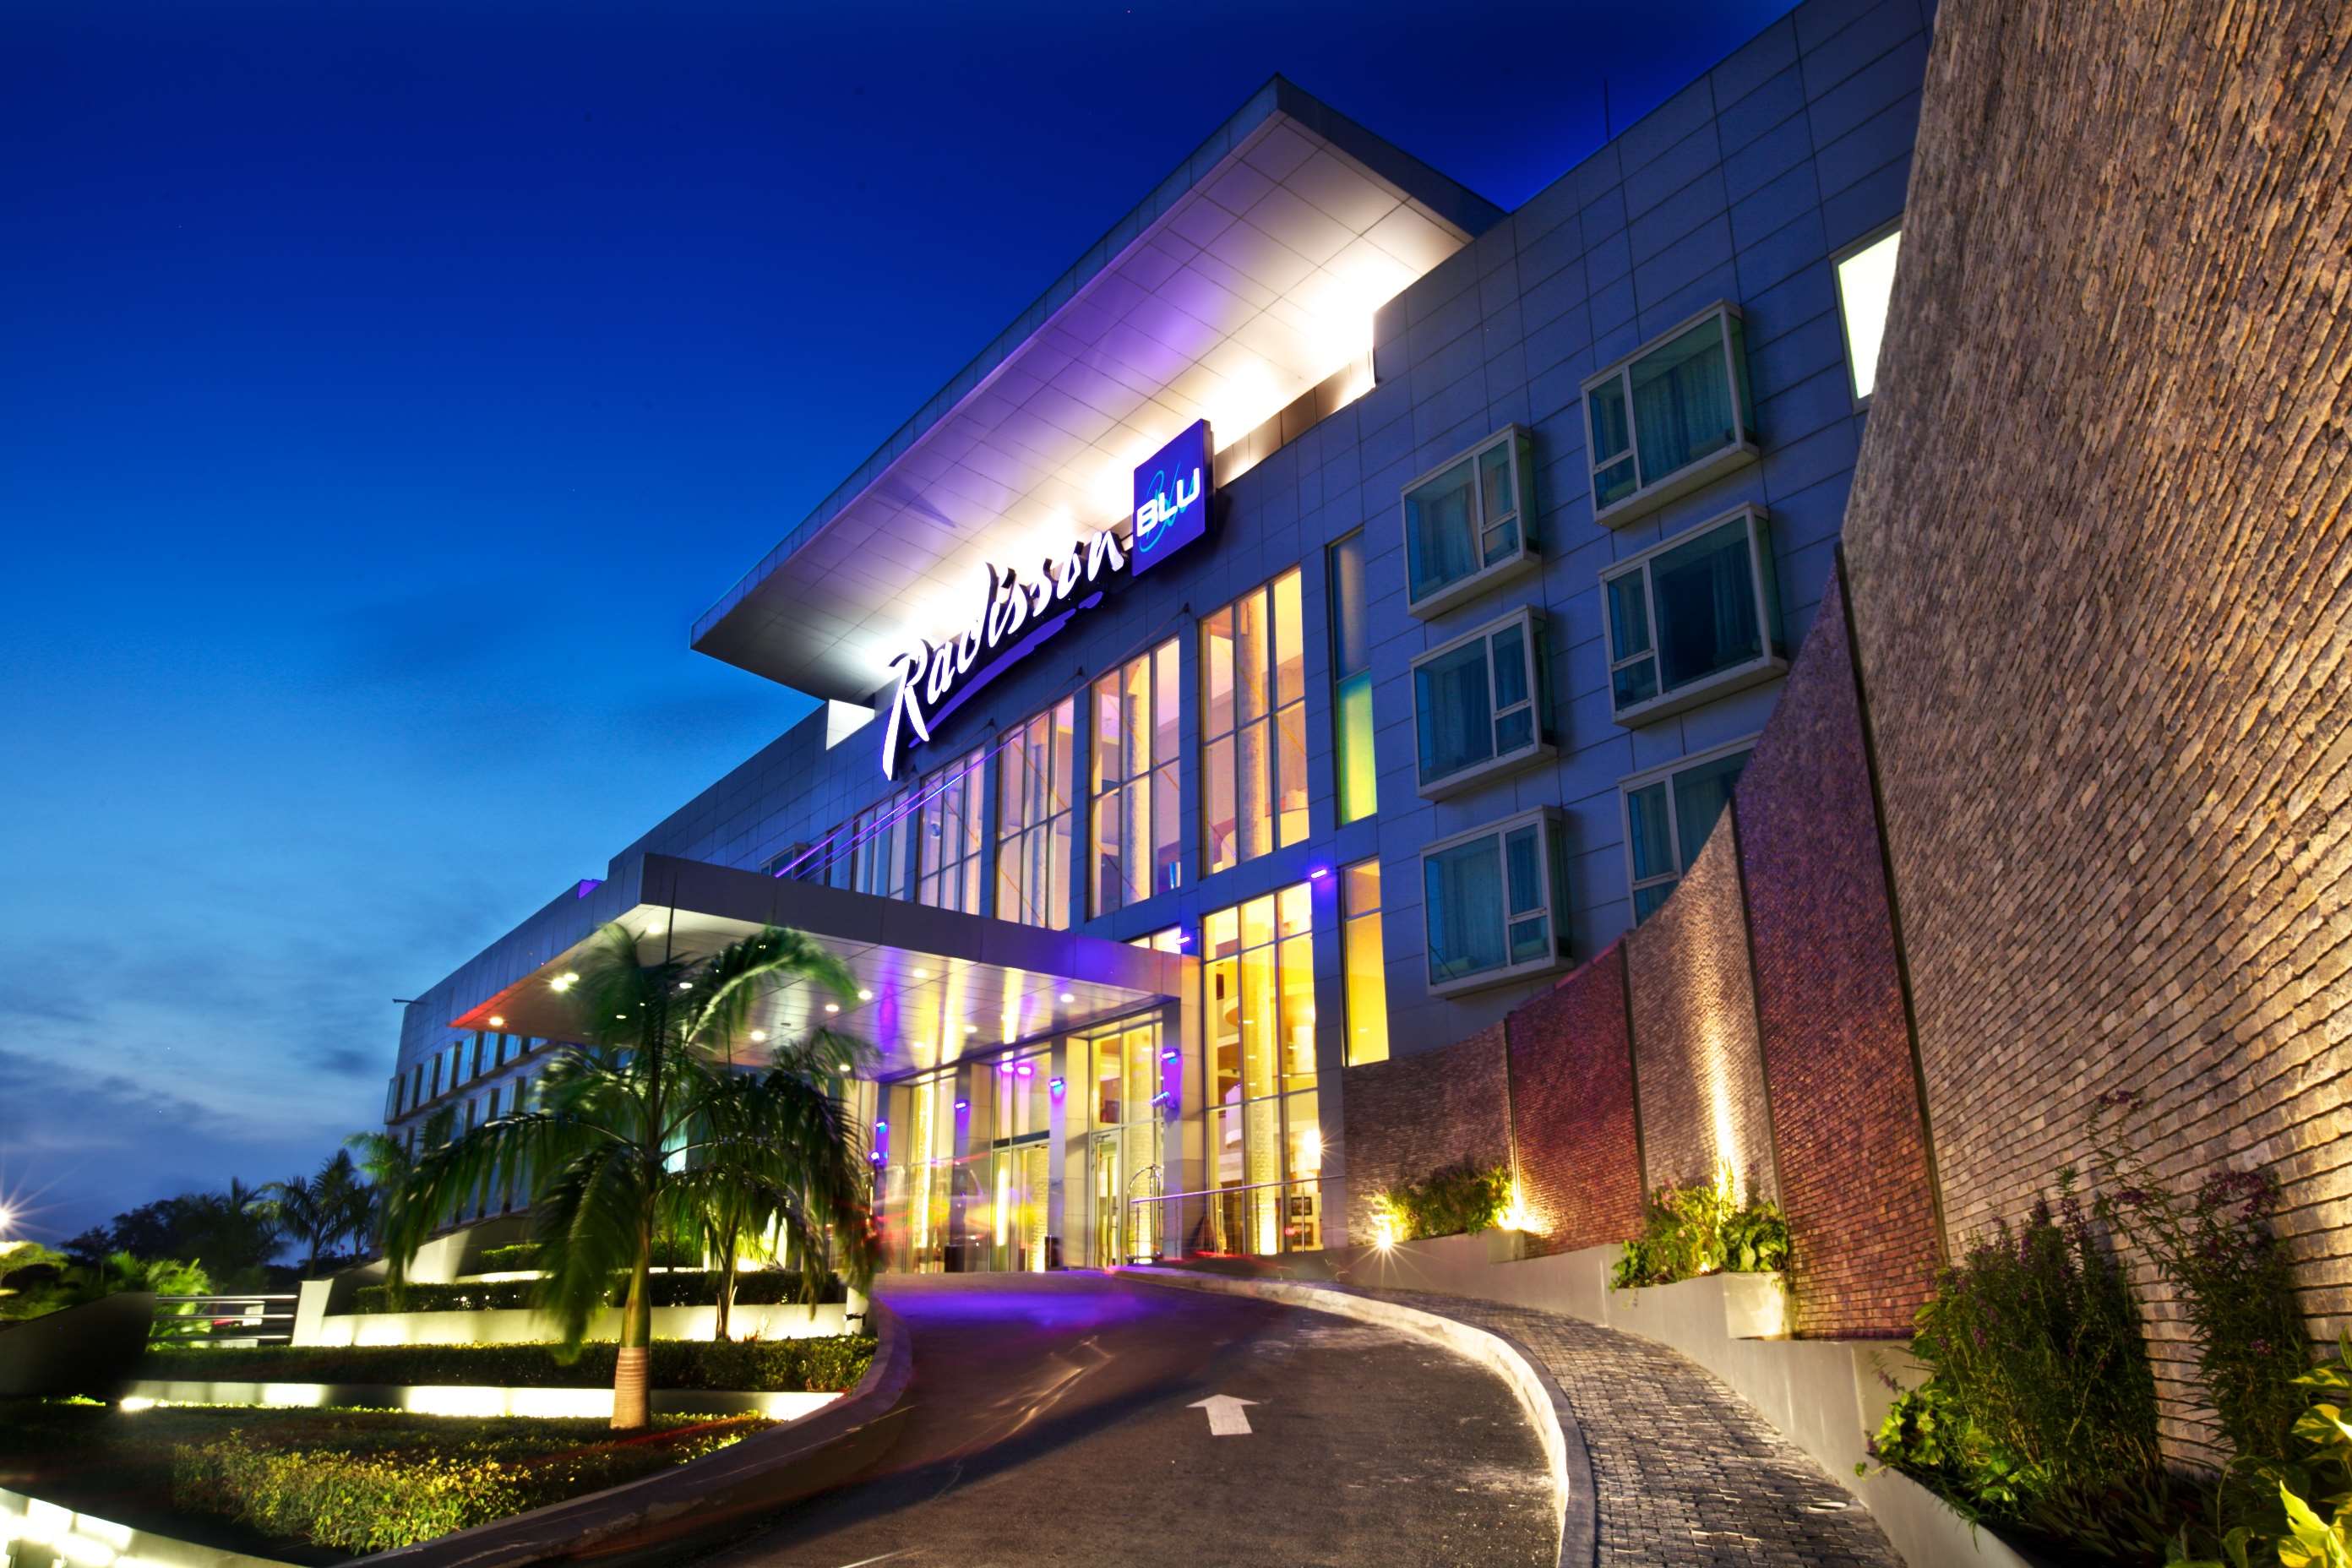 Fotos - Radisson Blu Anchorage Hotel, Lagos, V.I. - 2